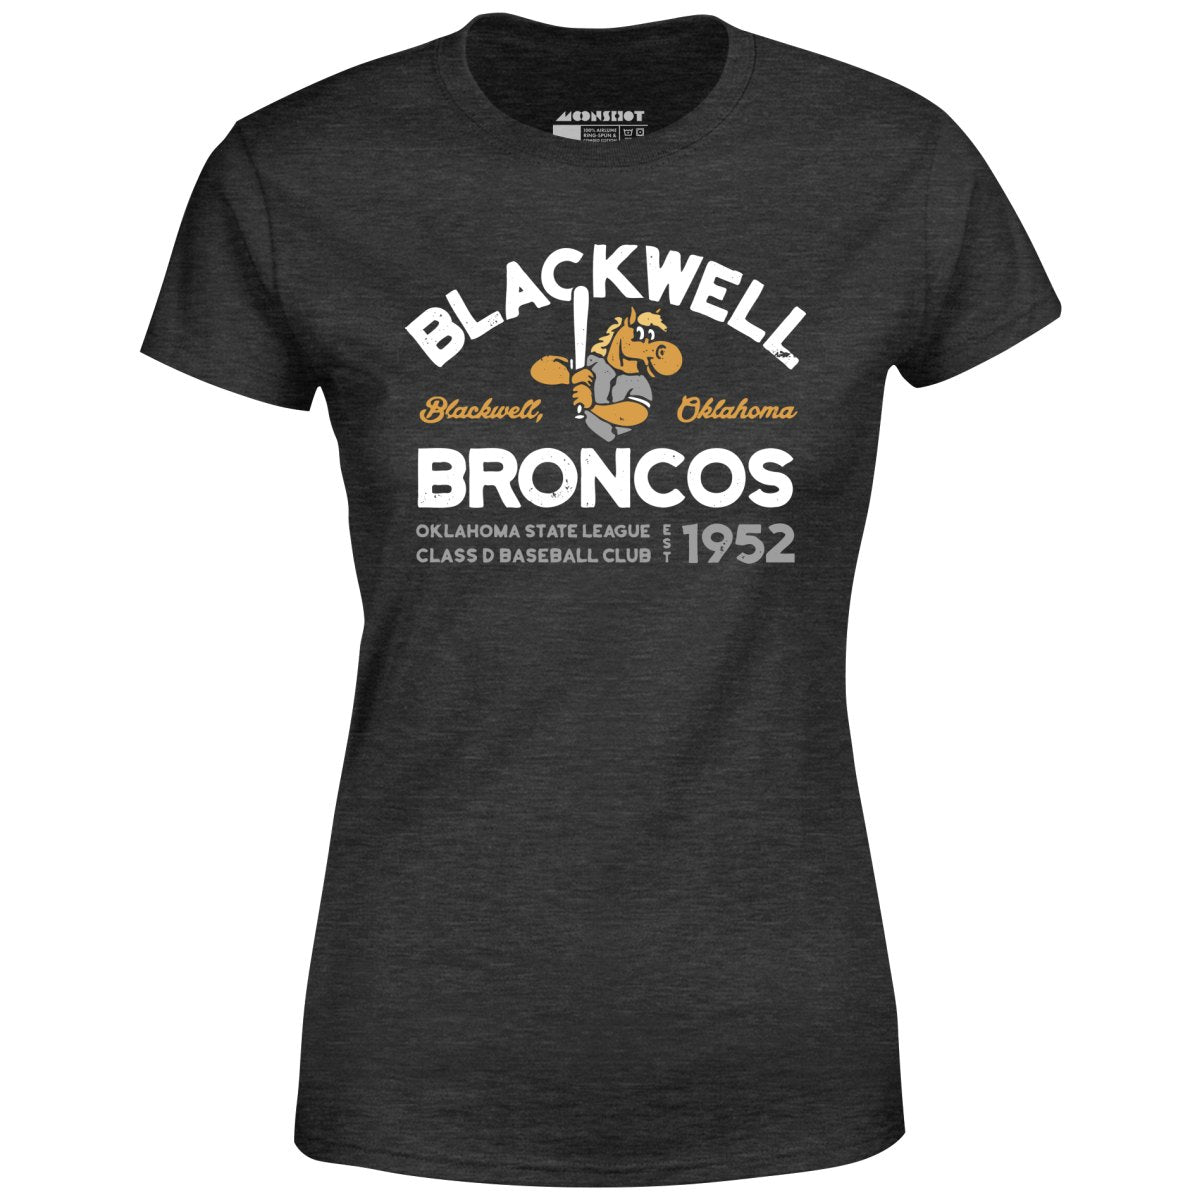 Blackwell Broncos - Oklahoma - Vintage Defunct Baseball Teams - Women's T-Shirt